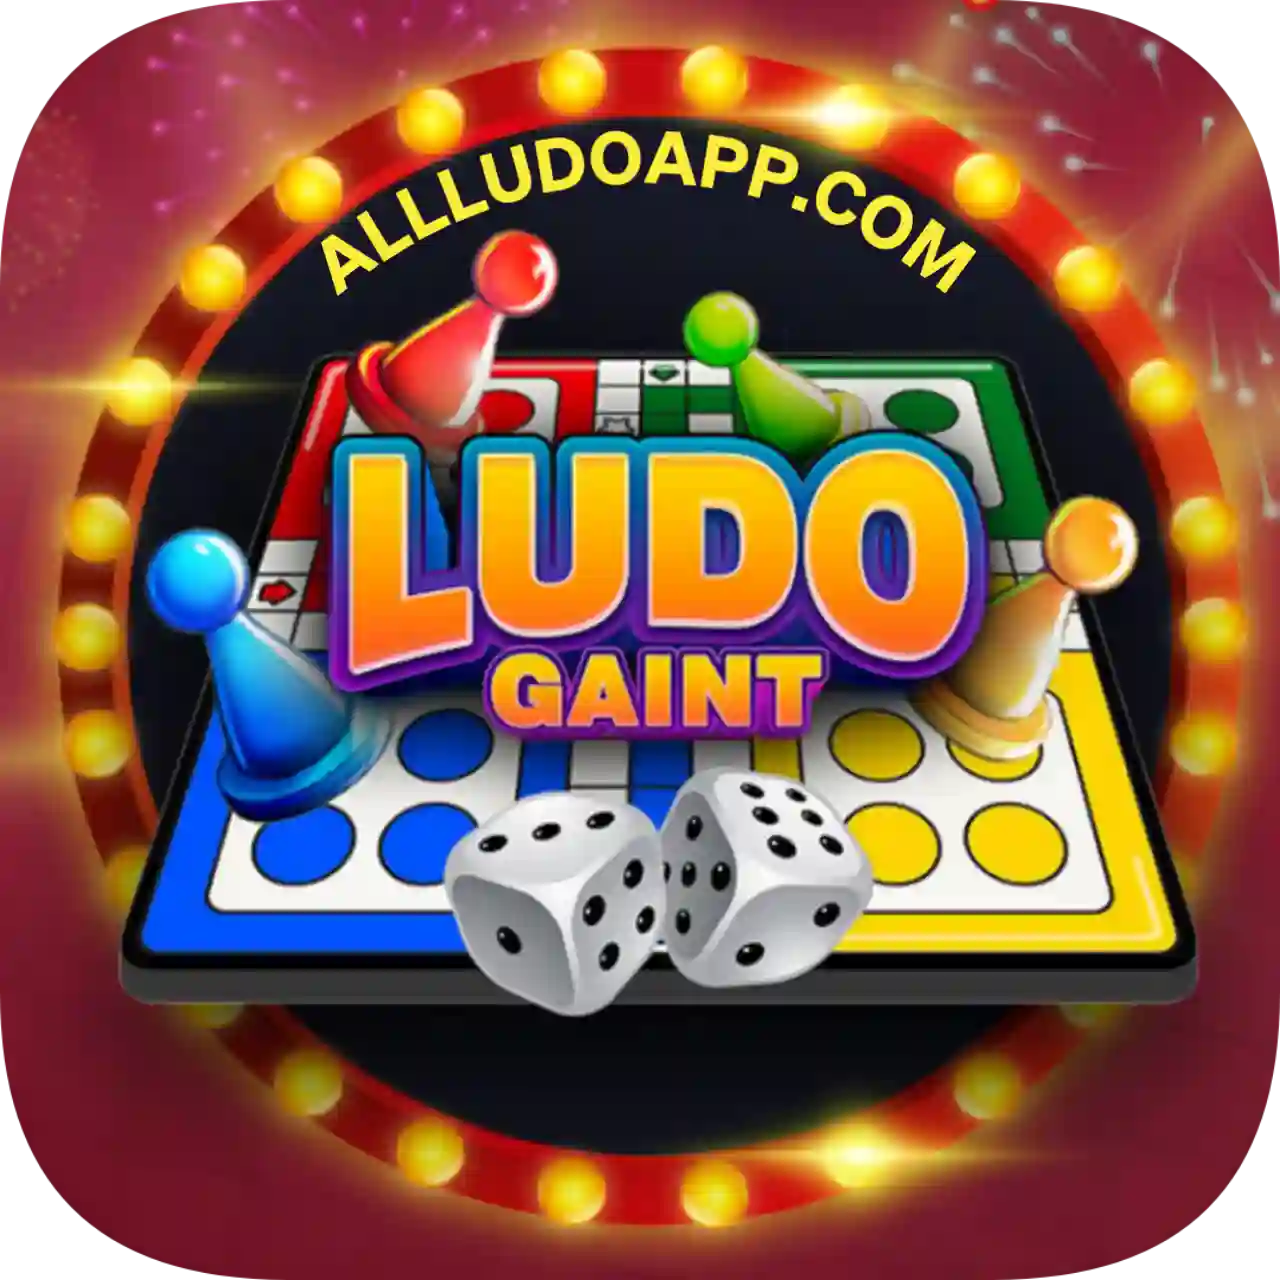 Gaint Ludo Apk Download - All Ludo App List